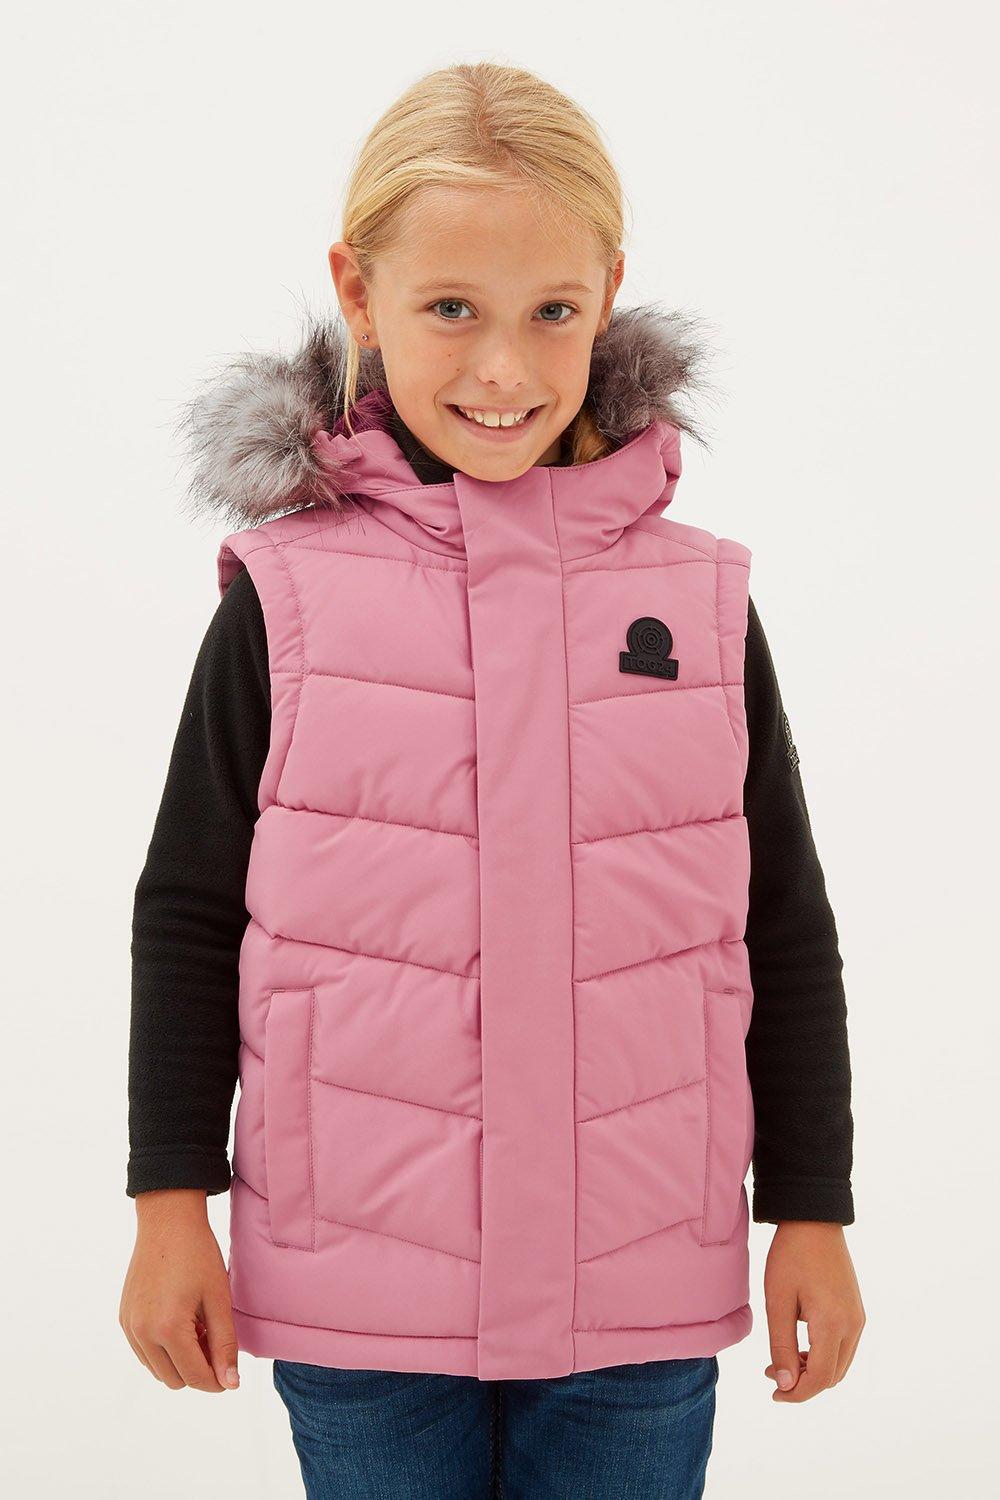 discount 82% H&M vest Pink 9-12M KIDS FASHION Jackets Elegant 